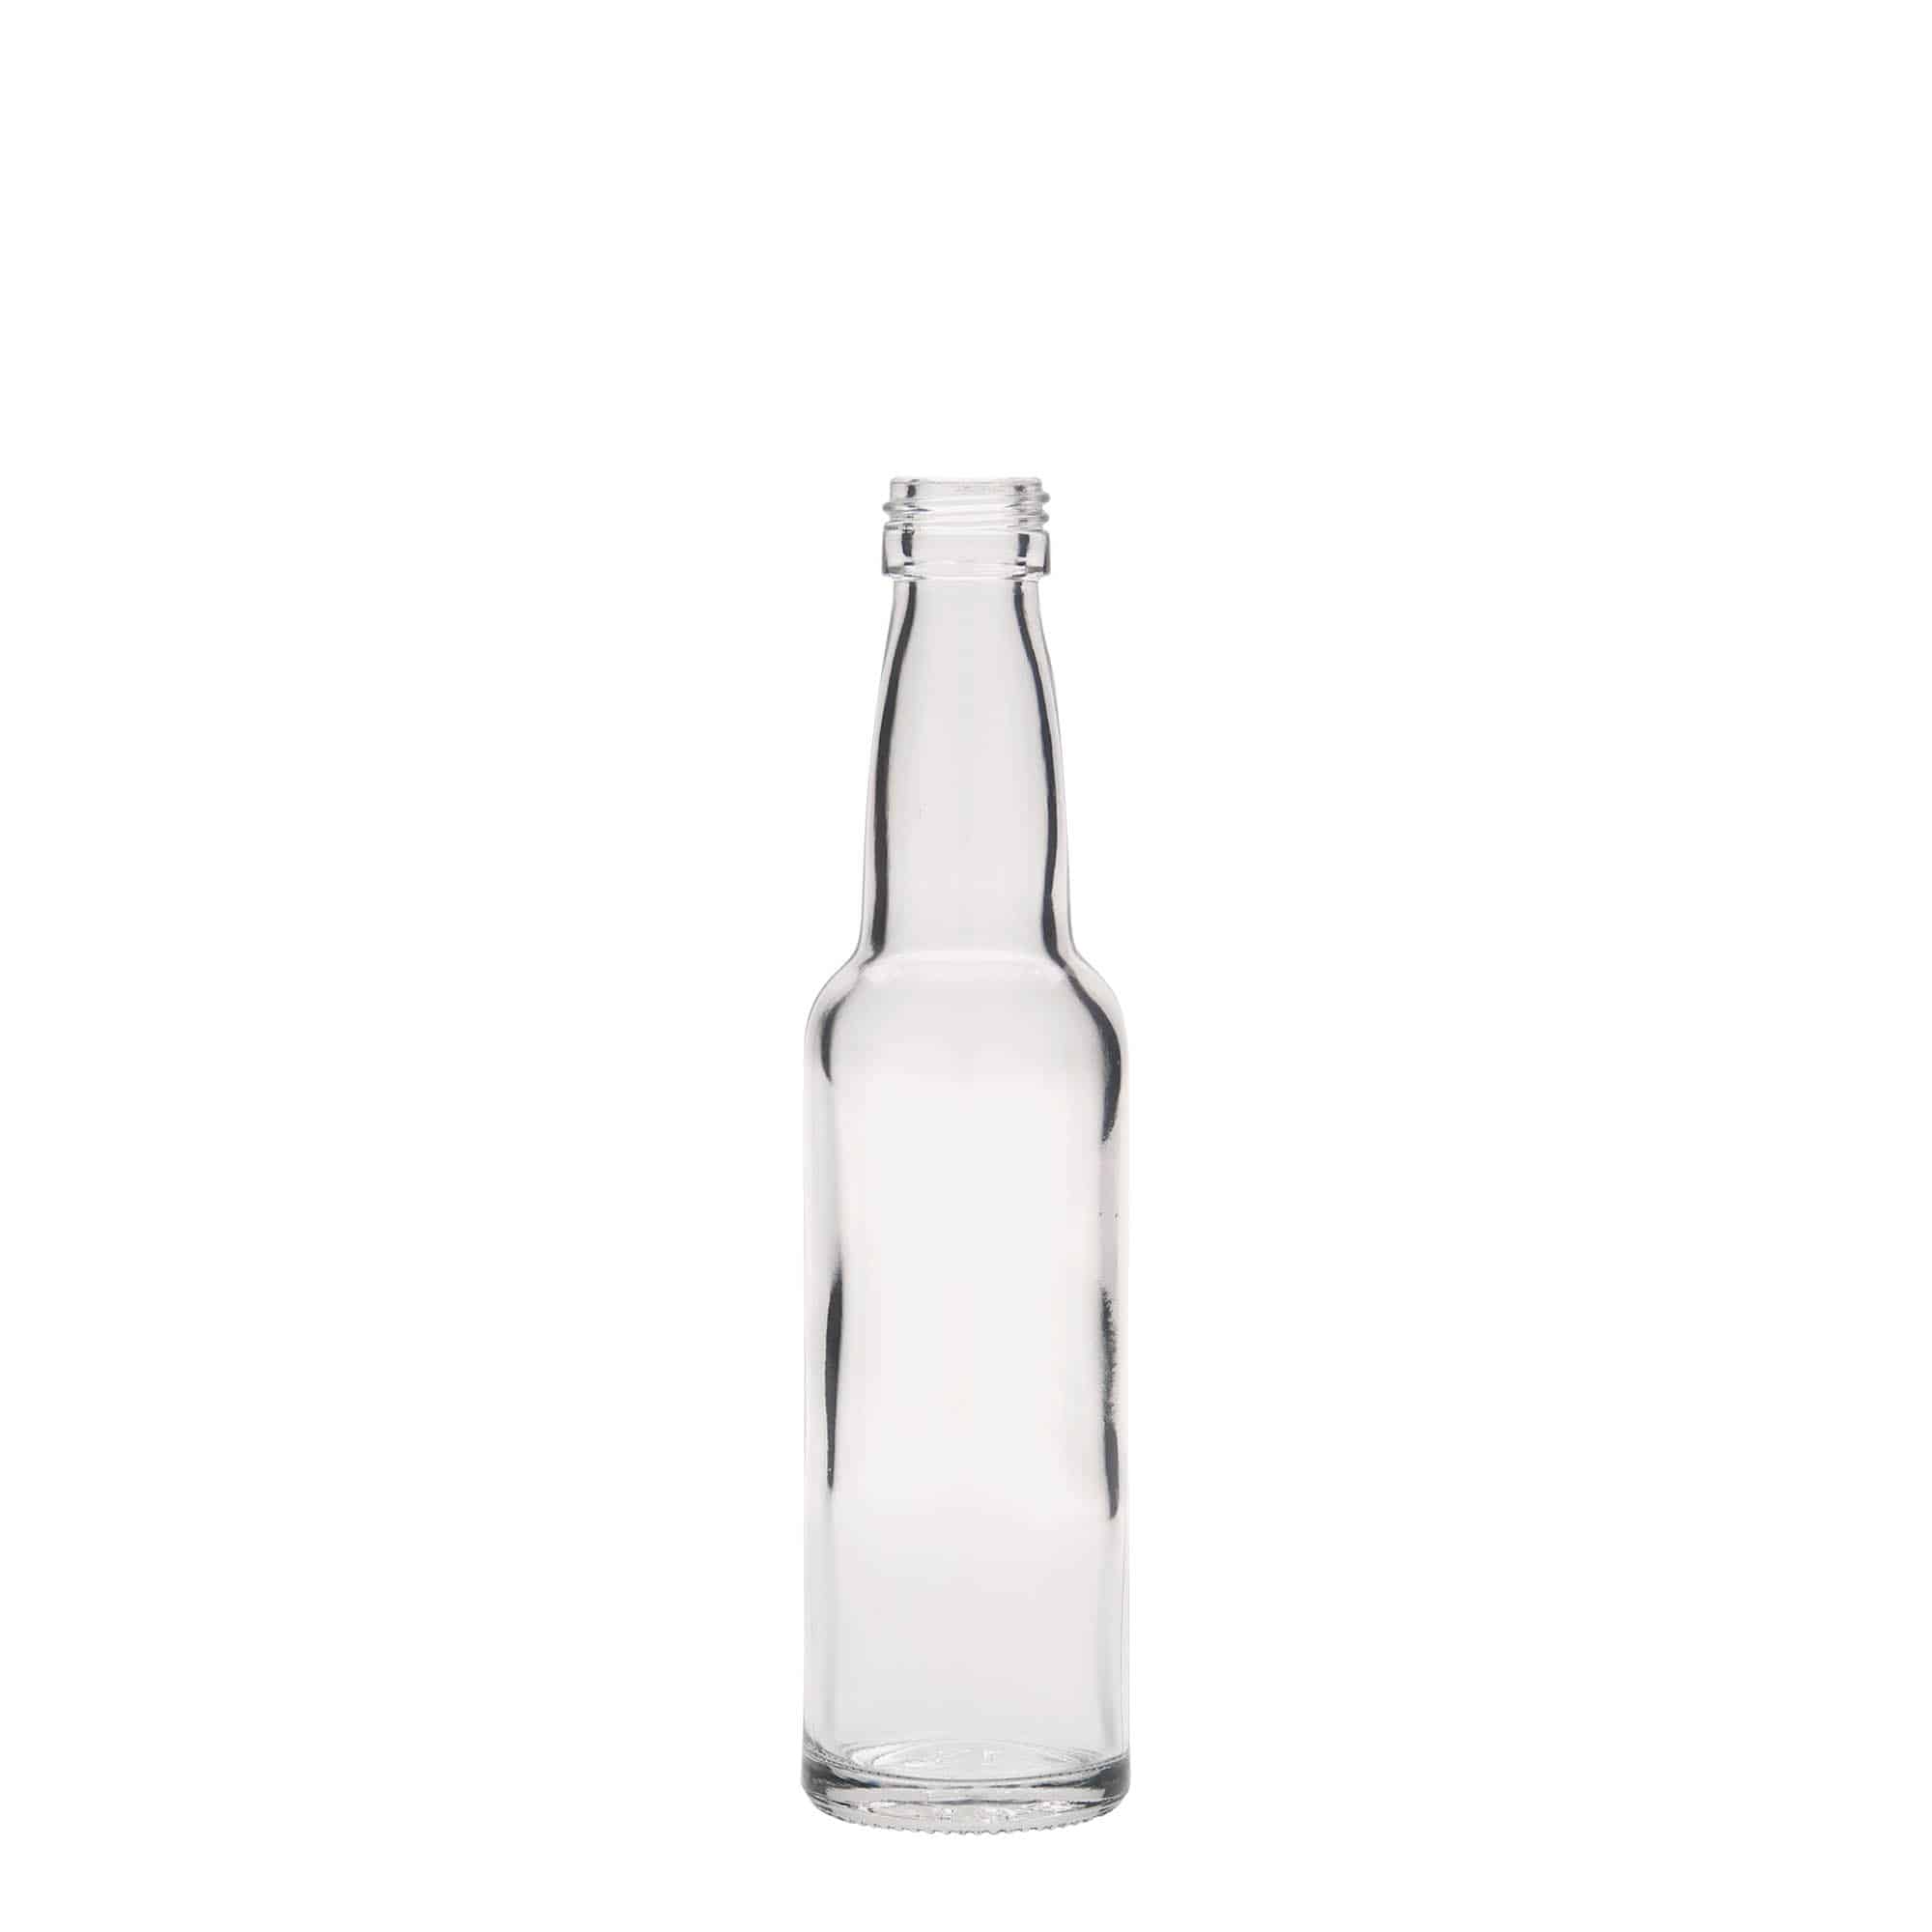 100 ml glass bottle 'Proba', closure: PP 22